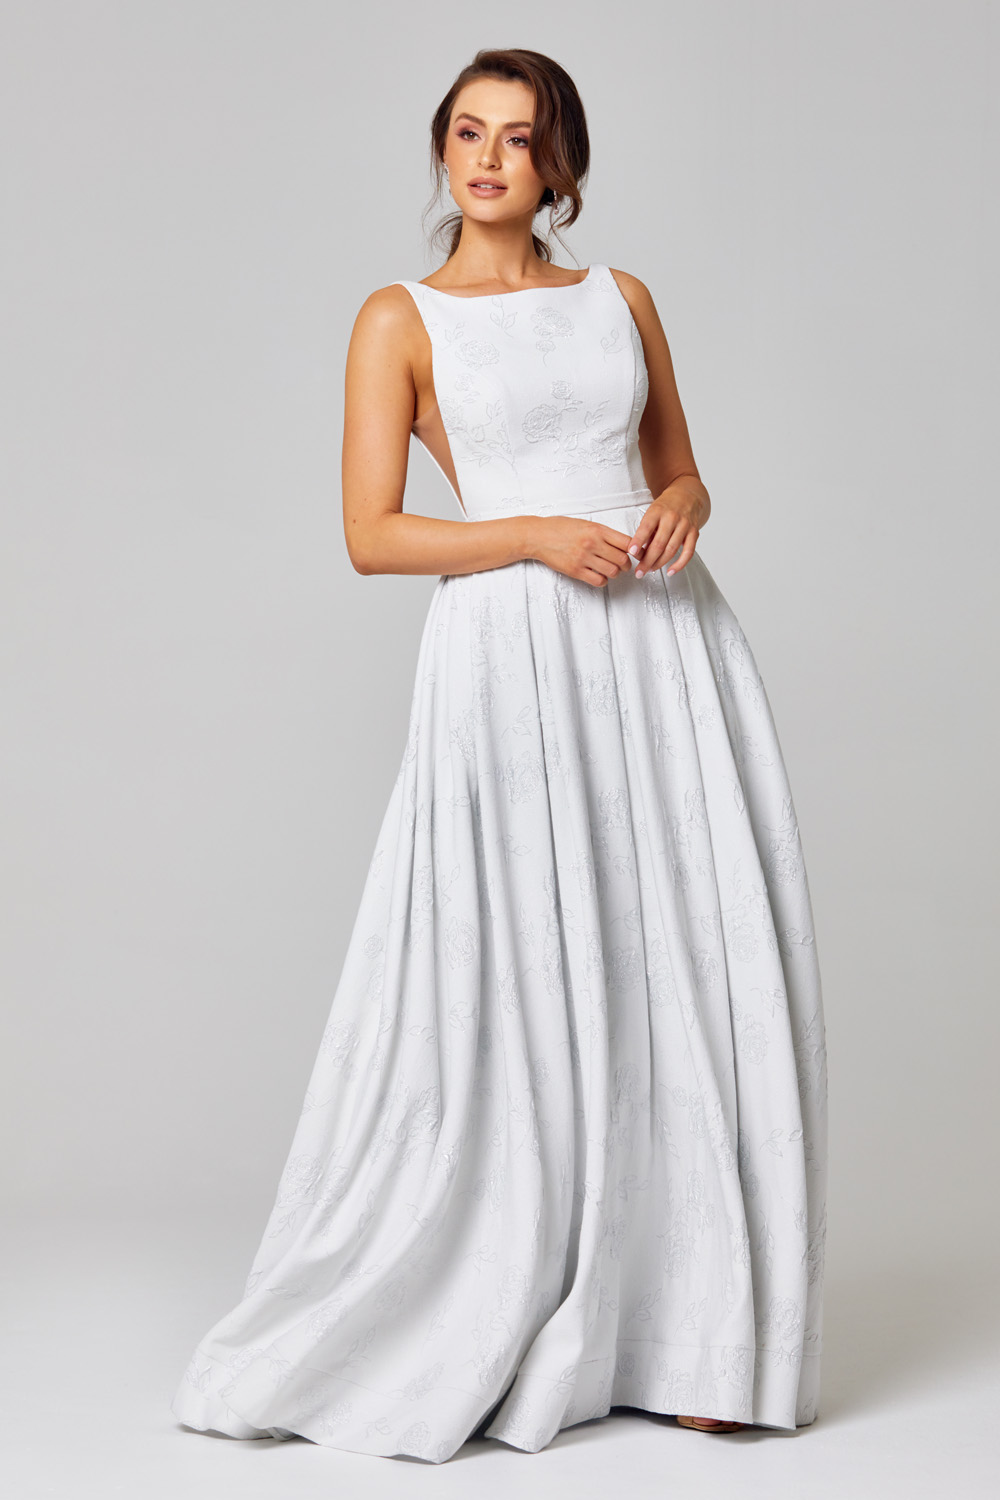 SAVANNAH TC310 Wedding Dresses dress by Tania Olsen Designs